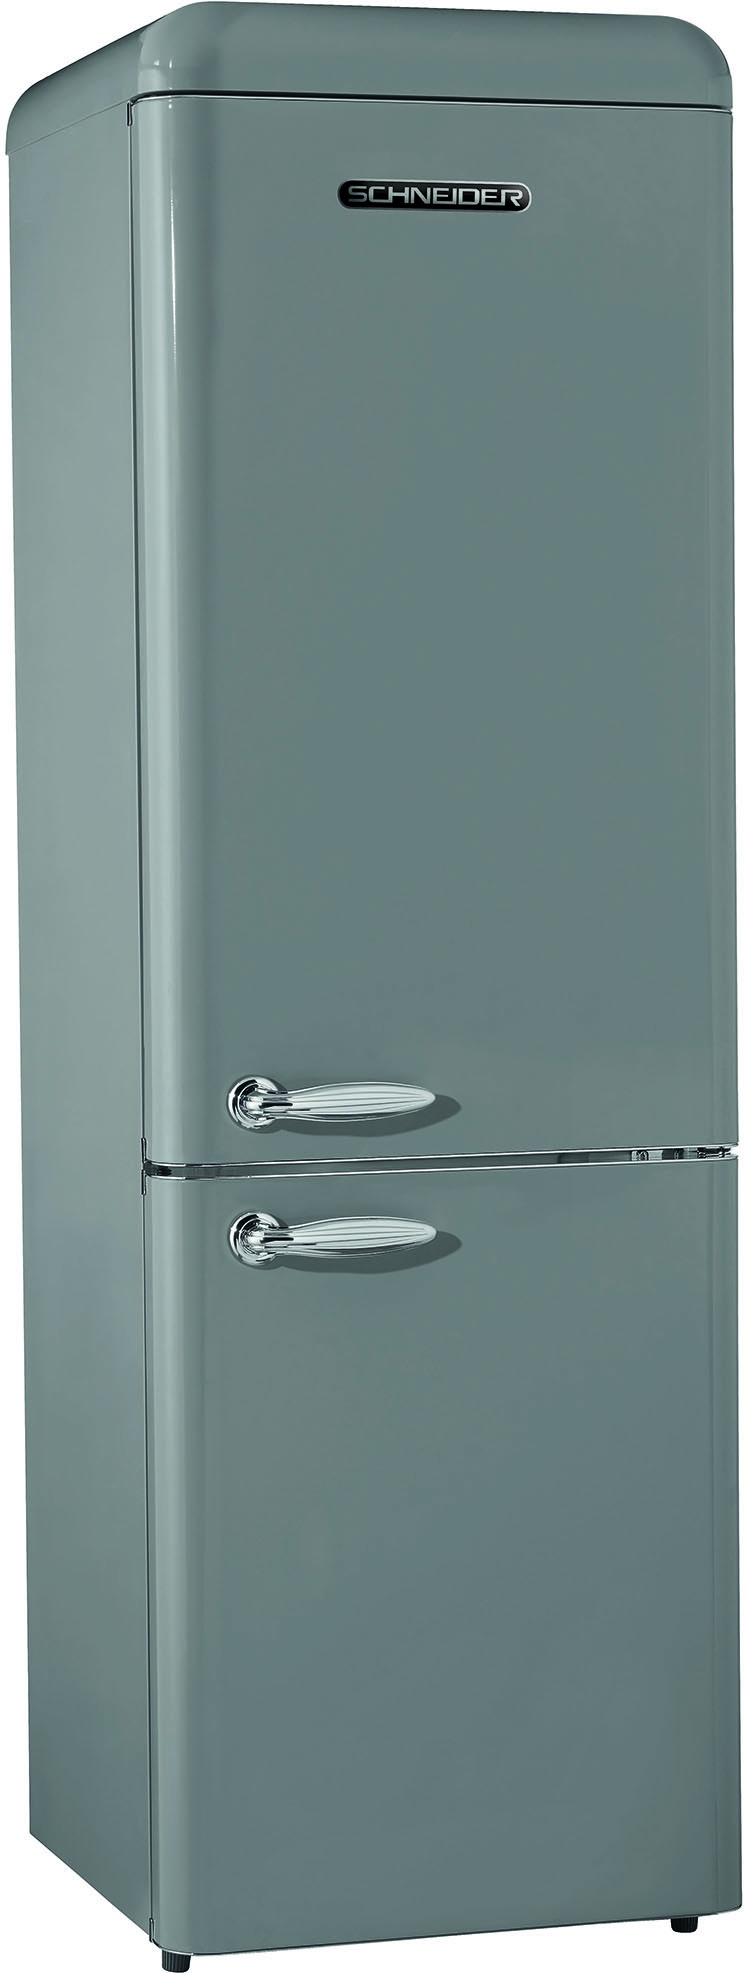 Aanbeveling deugd onregelmatig Schneider SL300SGR CB A koelkast zilver